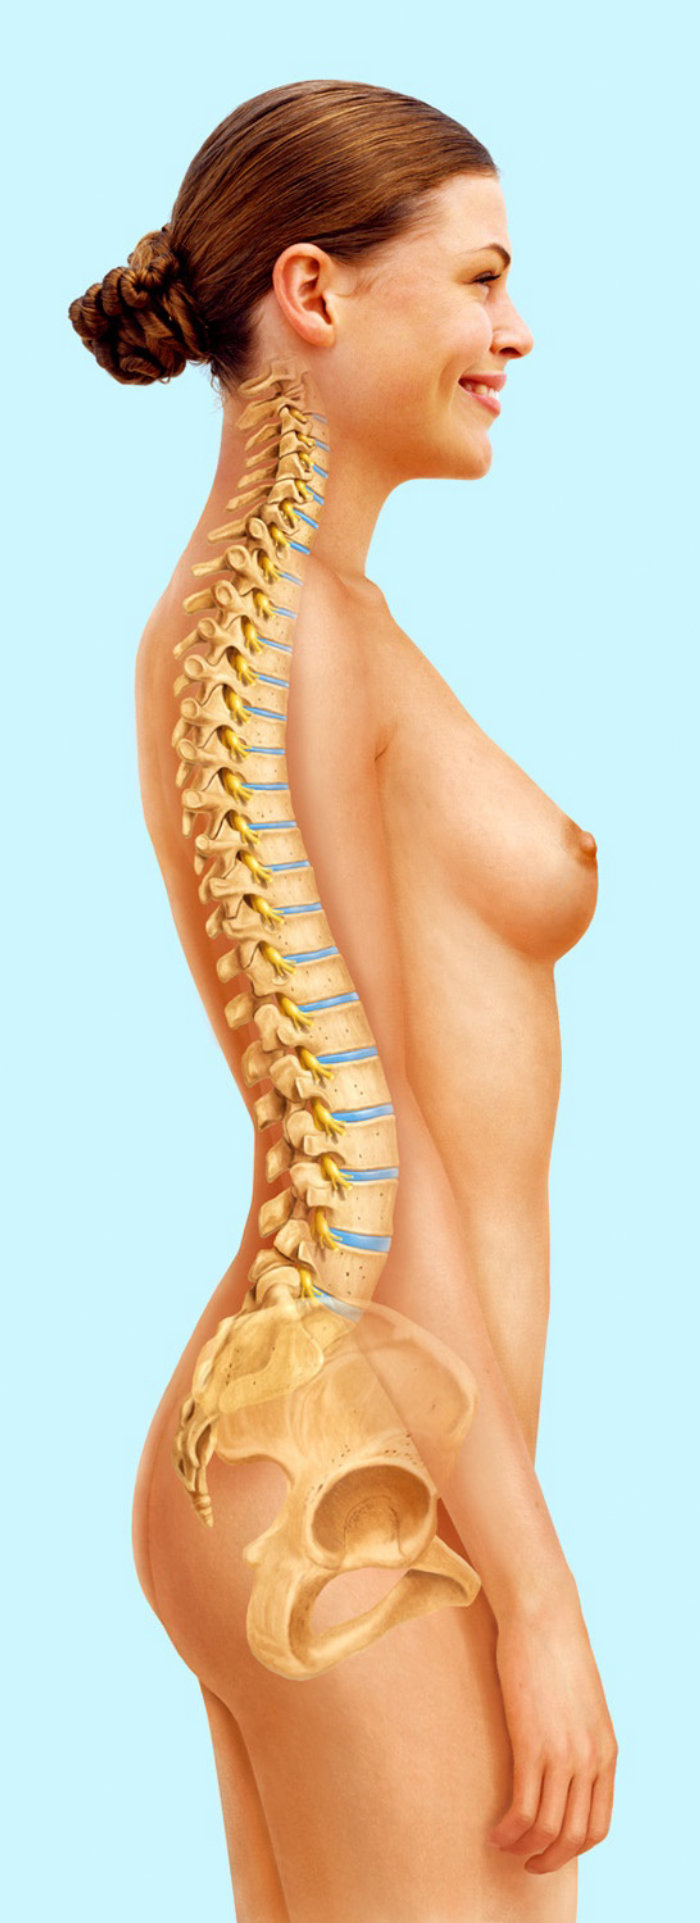 Woman backbone | Medical illustration collection